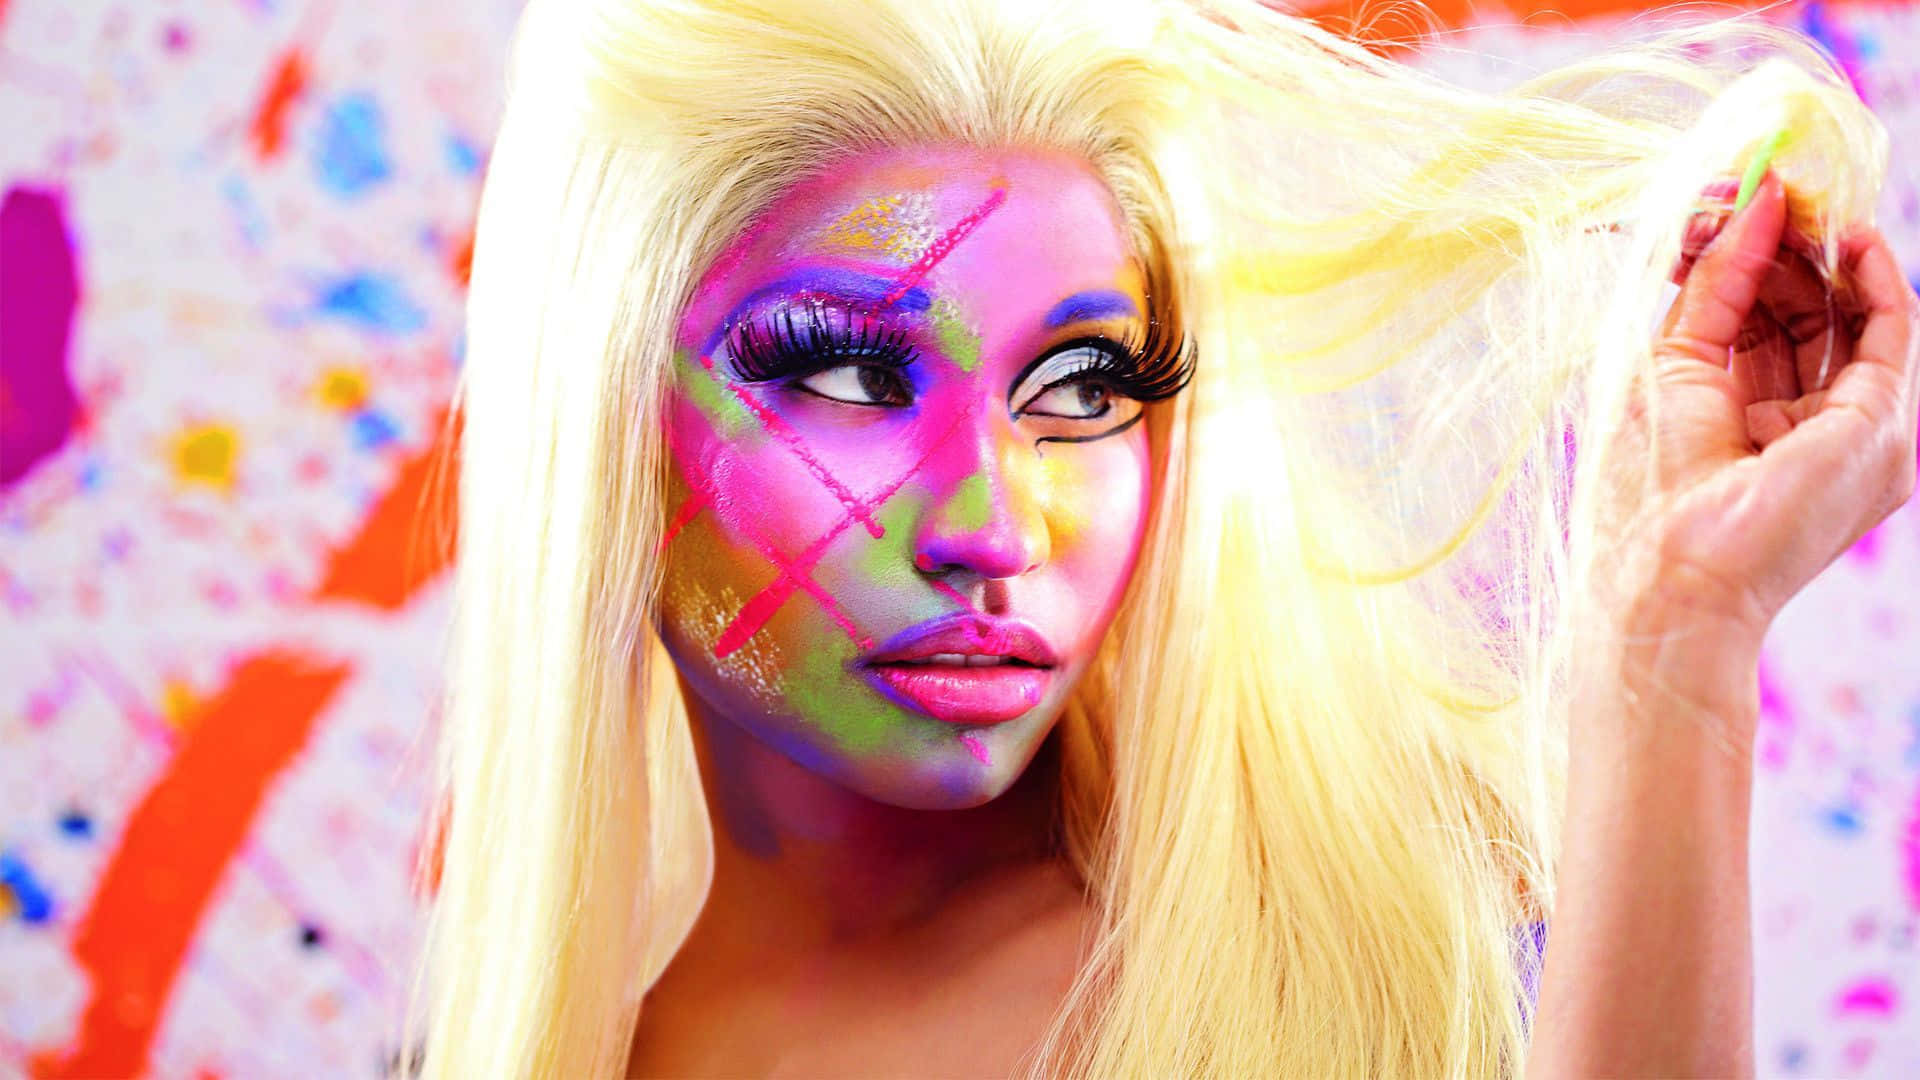 Nicki Minaj striking a pose against a blue backdrop